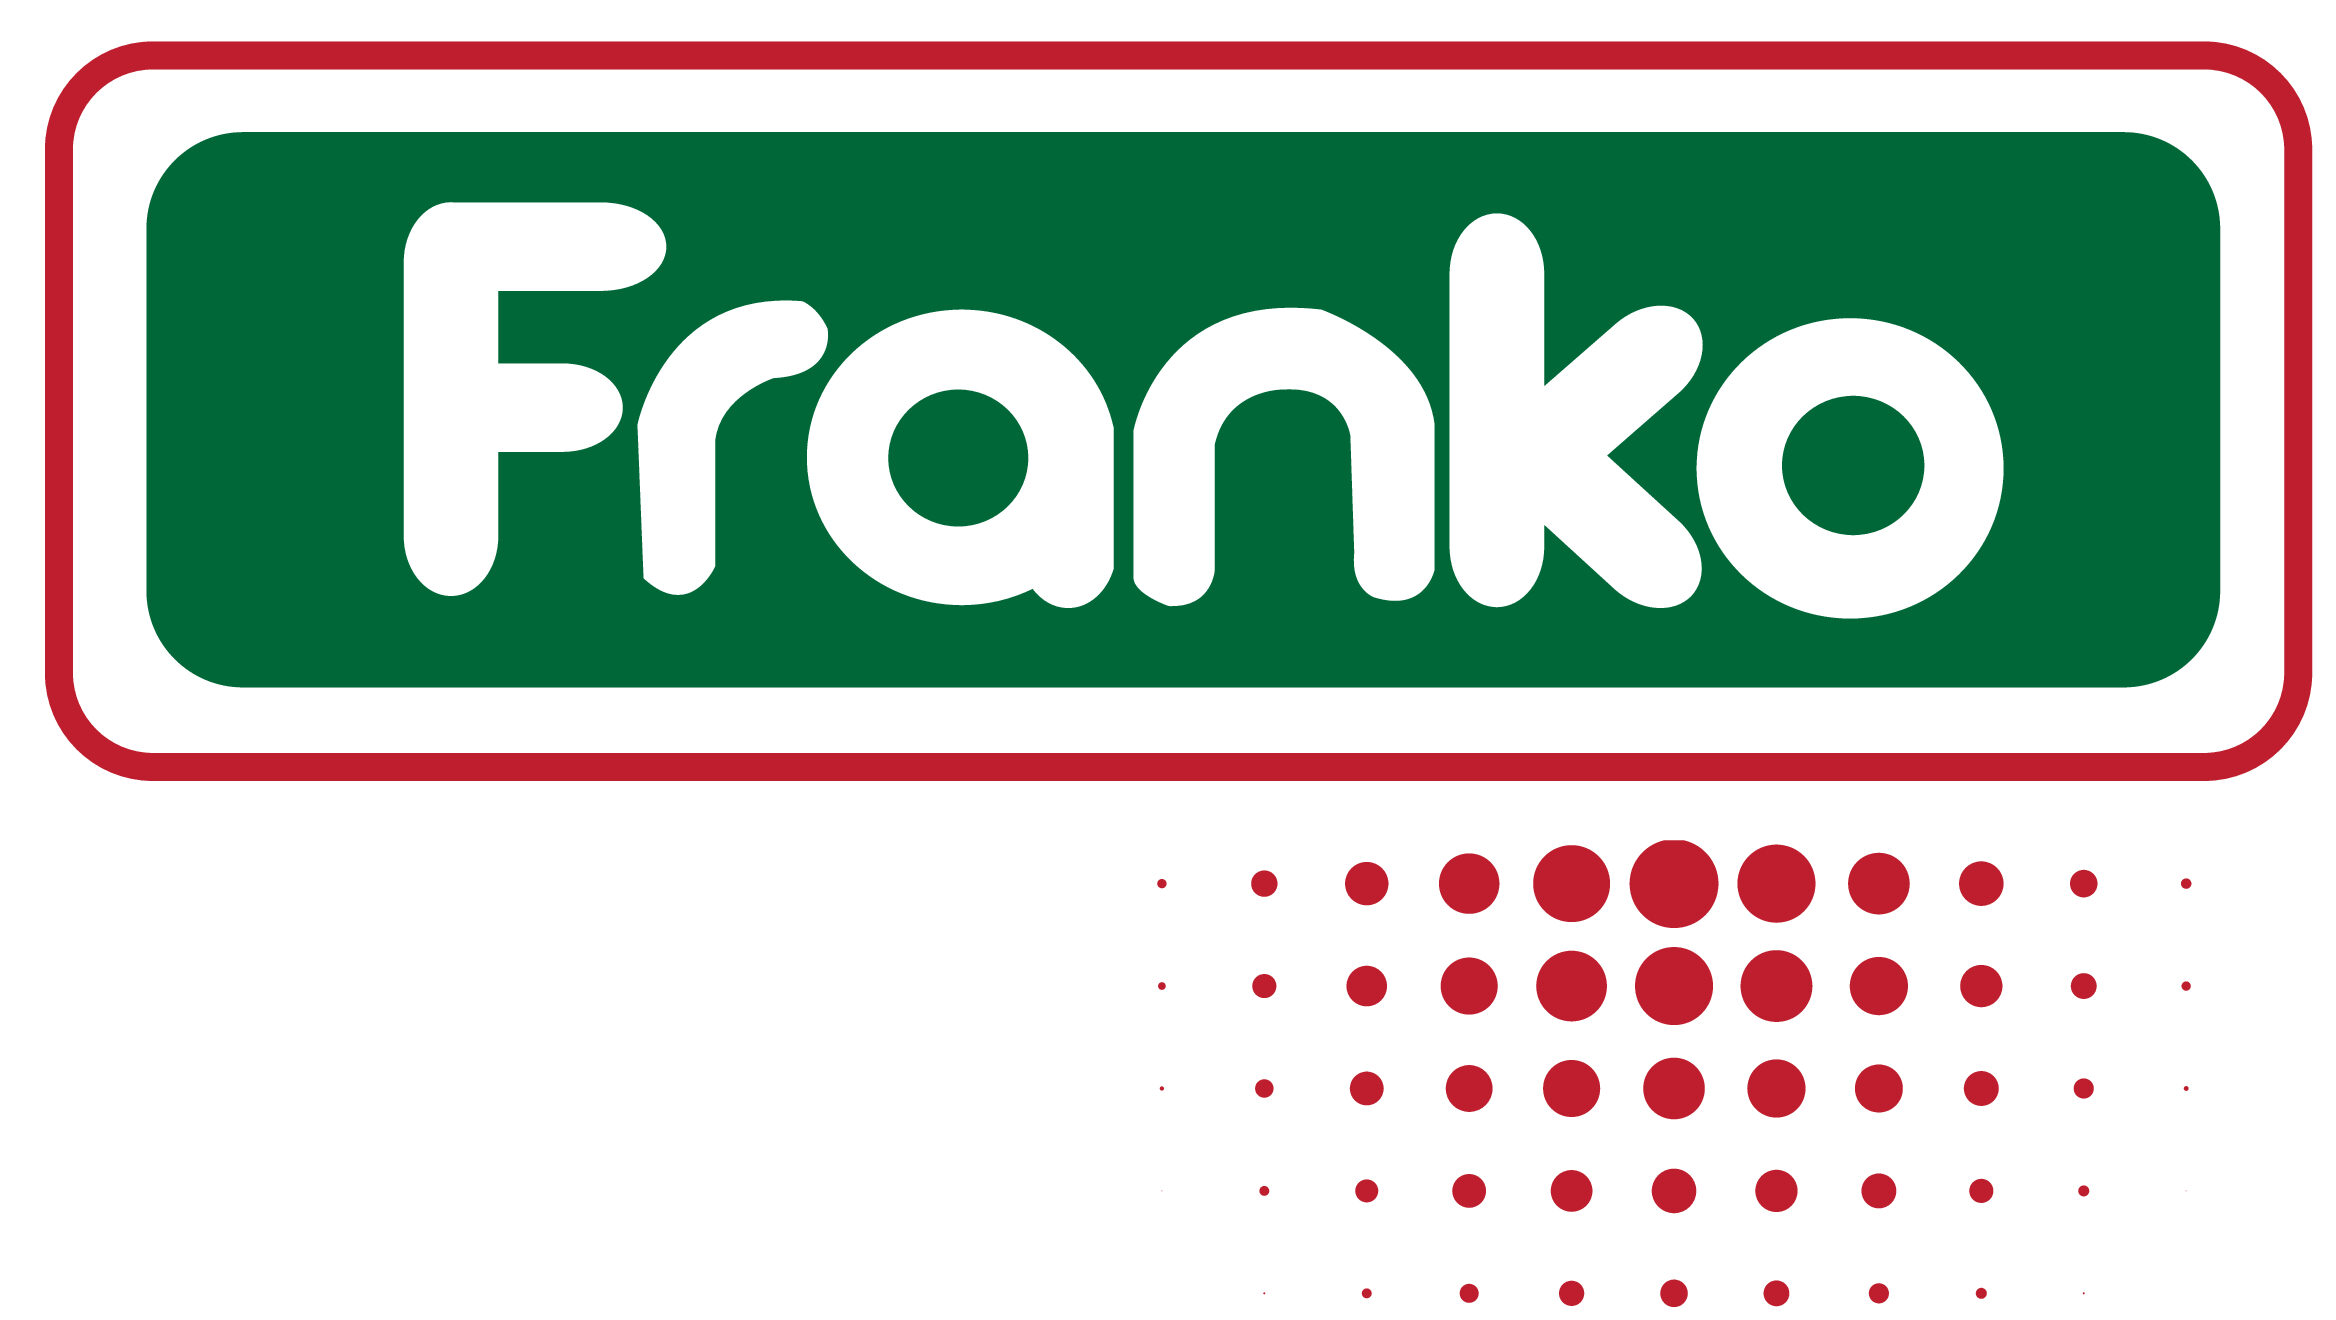 Franko logo